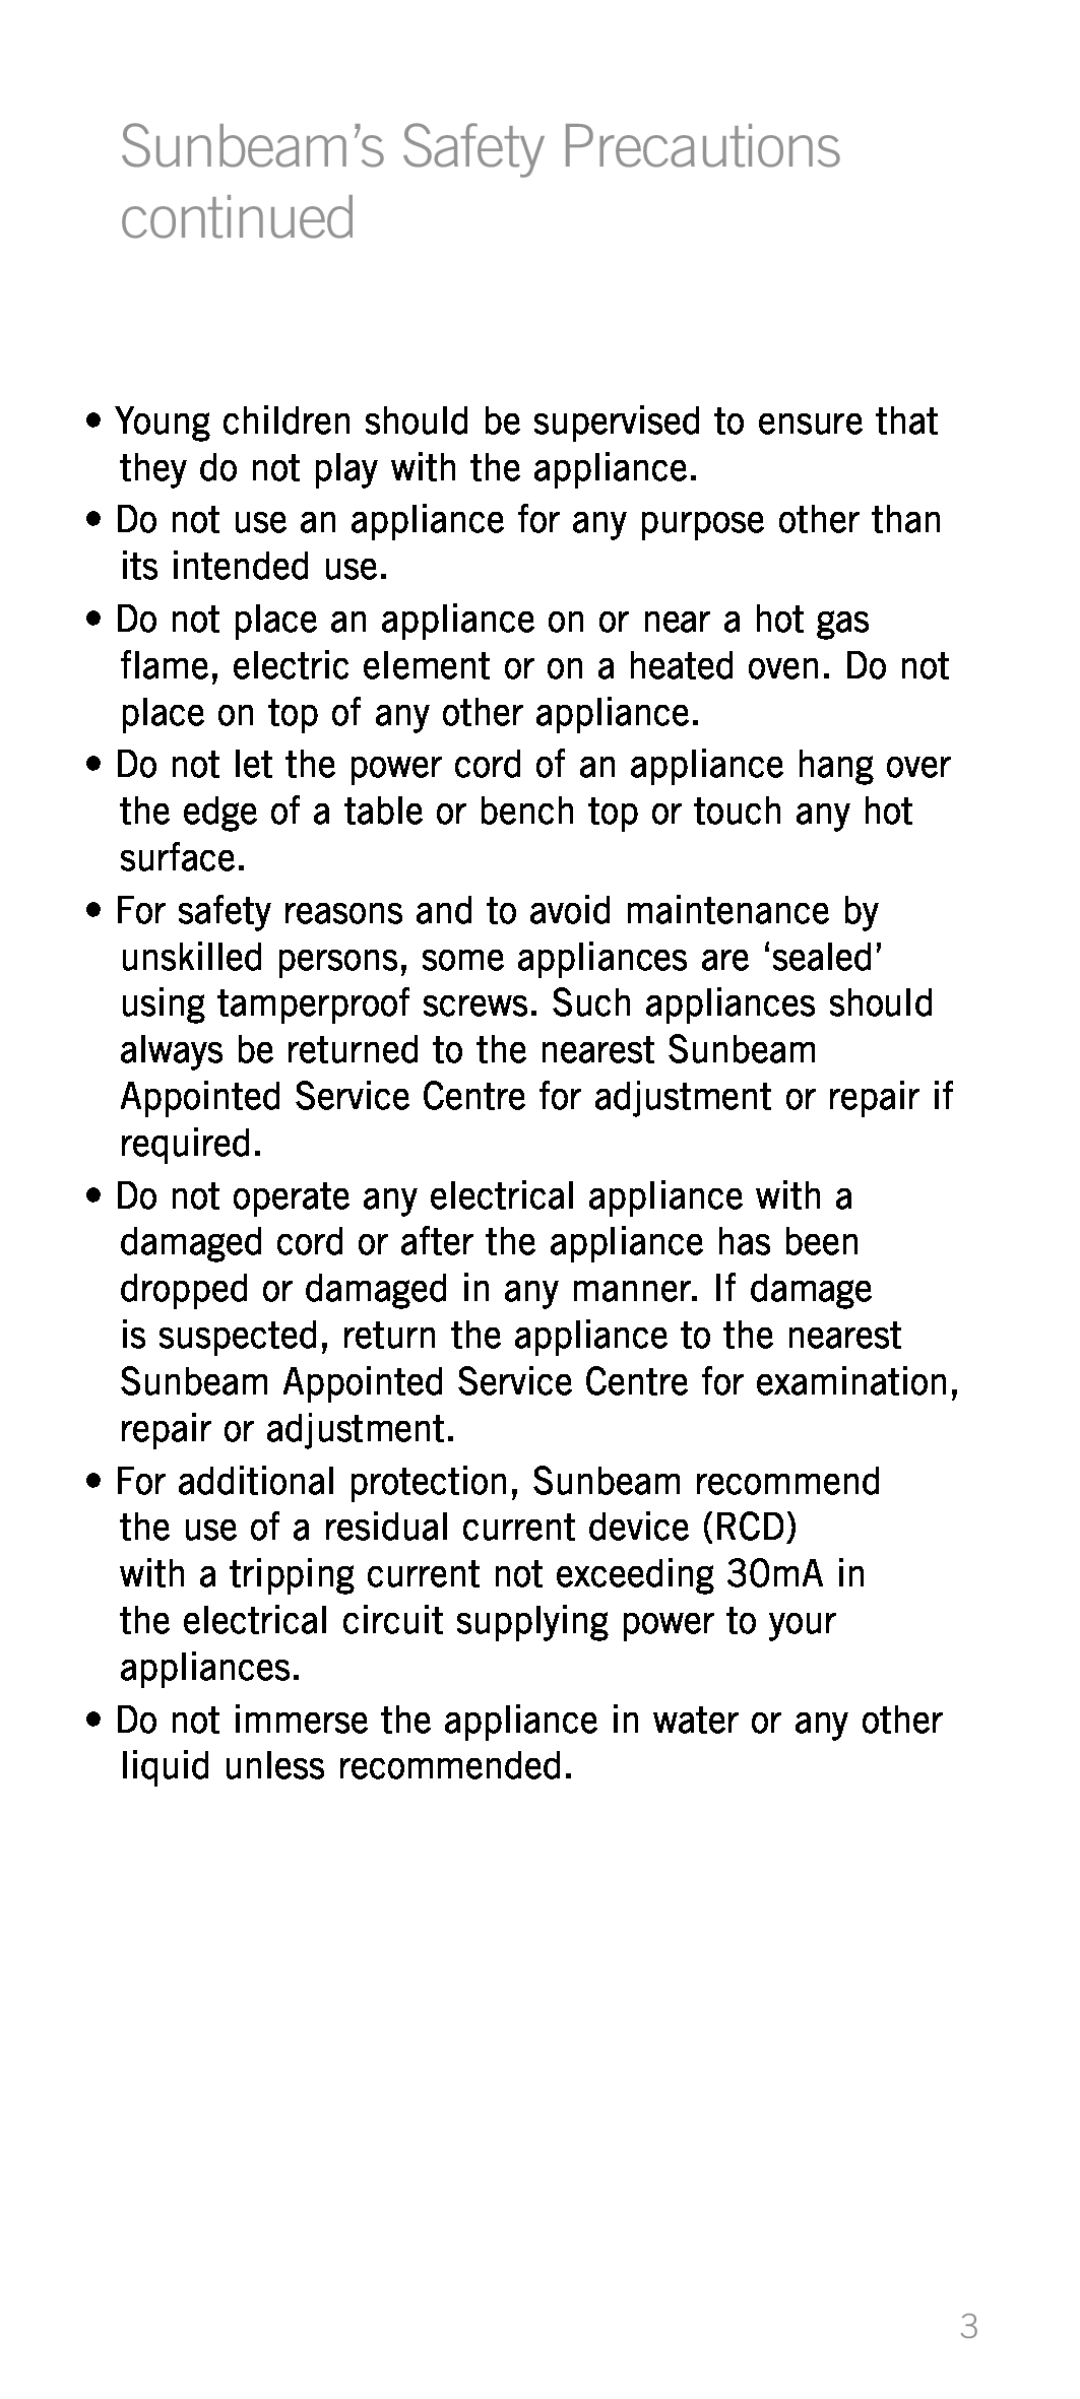 Sunbeam HD1600 manual Sunbeam’s Safety Precautions continued 